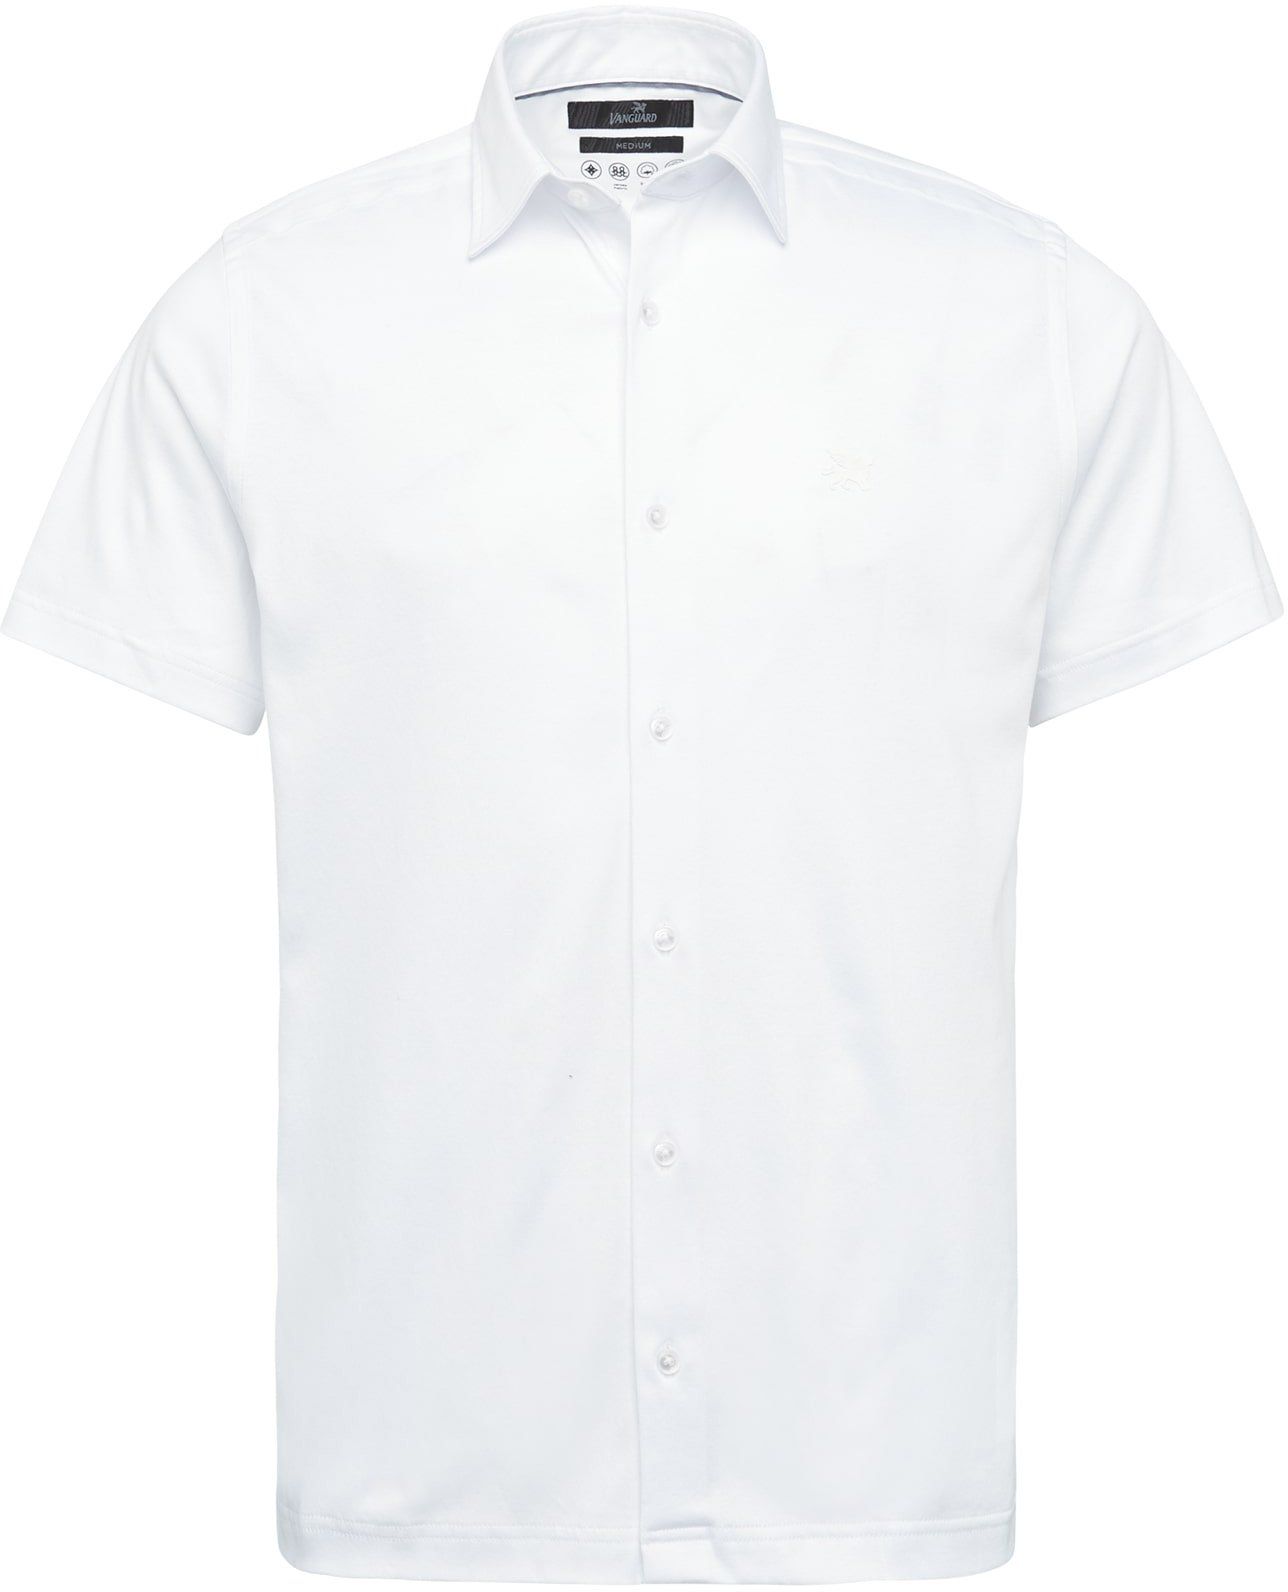 Vanguard Shirt SS White size 3XL